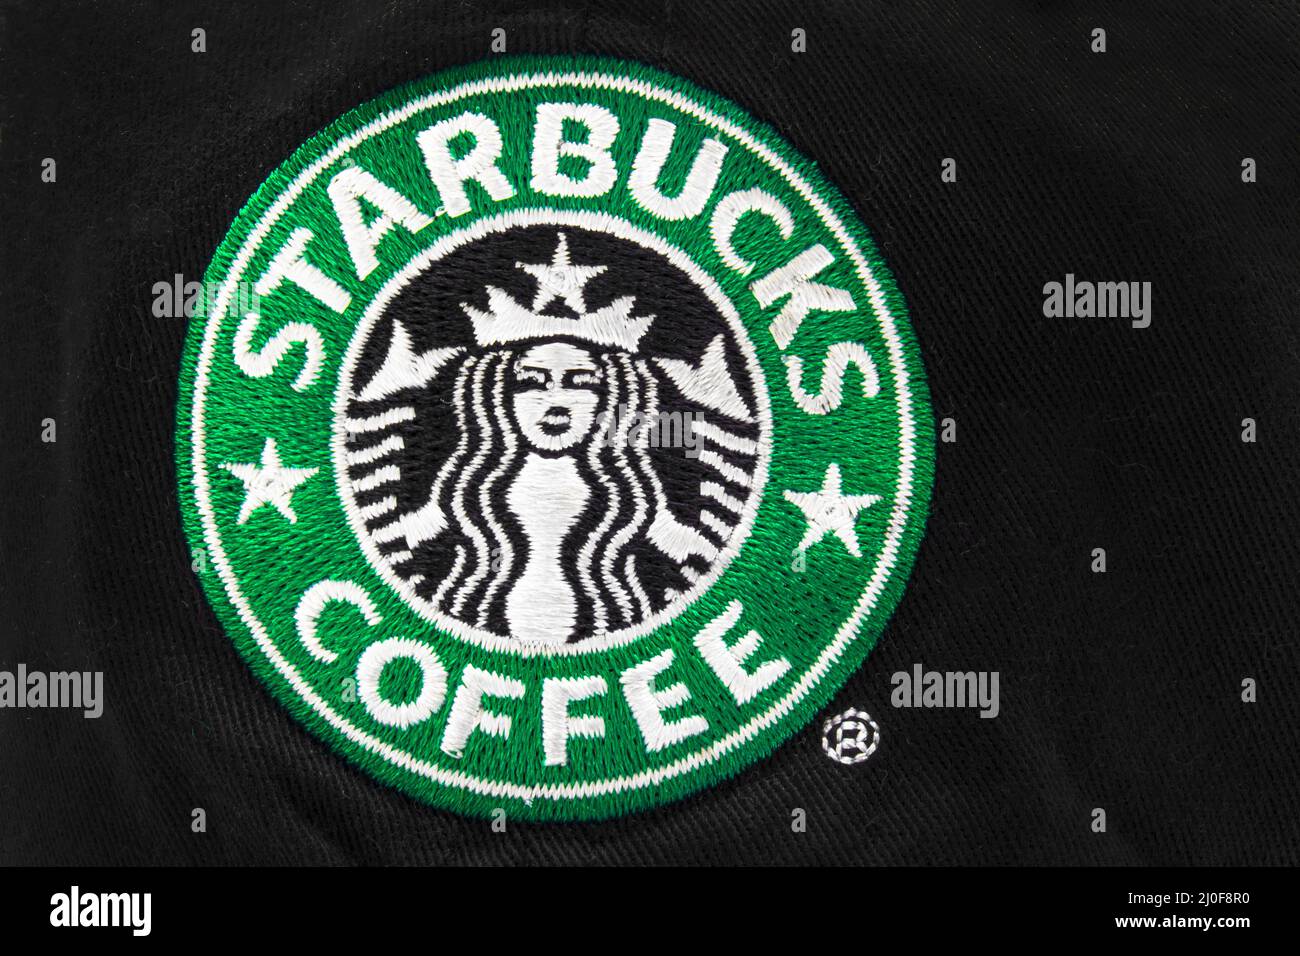 Calgary, Alberta, Canada. Aug 2, 2020. Close up of a Starbucks Coffee logo on a black cap or hat. Stock Photo